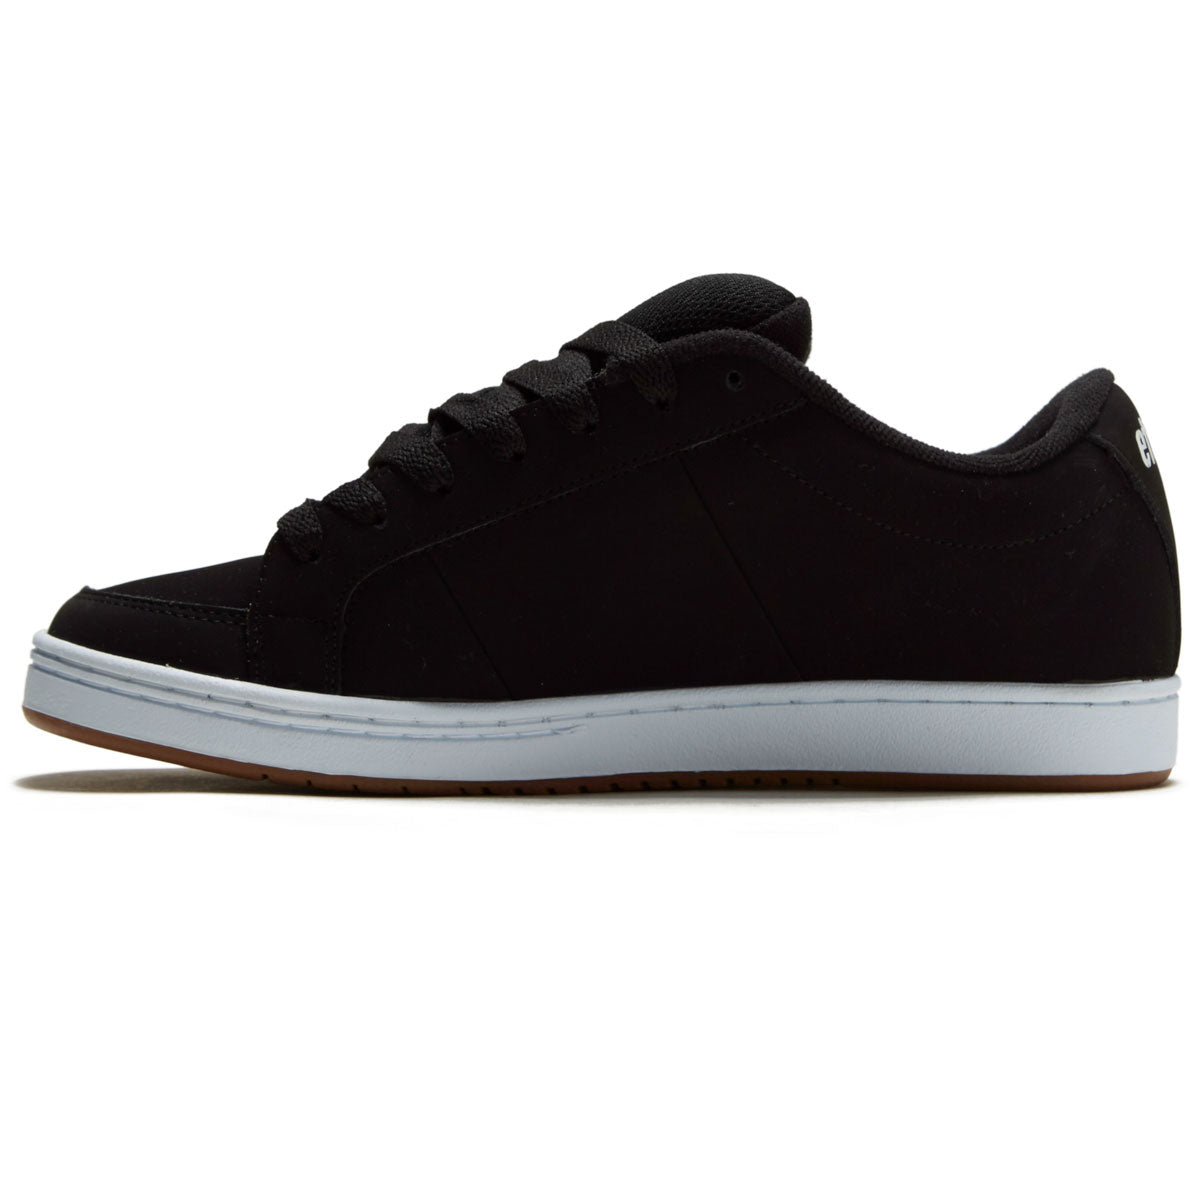 Etnies Kingpin Shoes - Black/White/Gum image 2